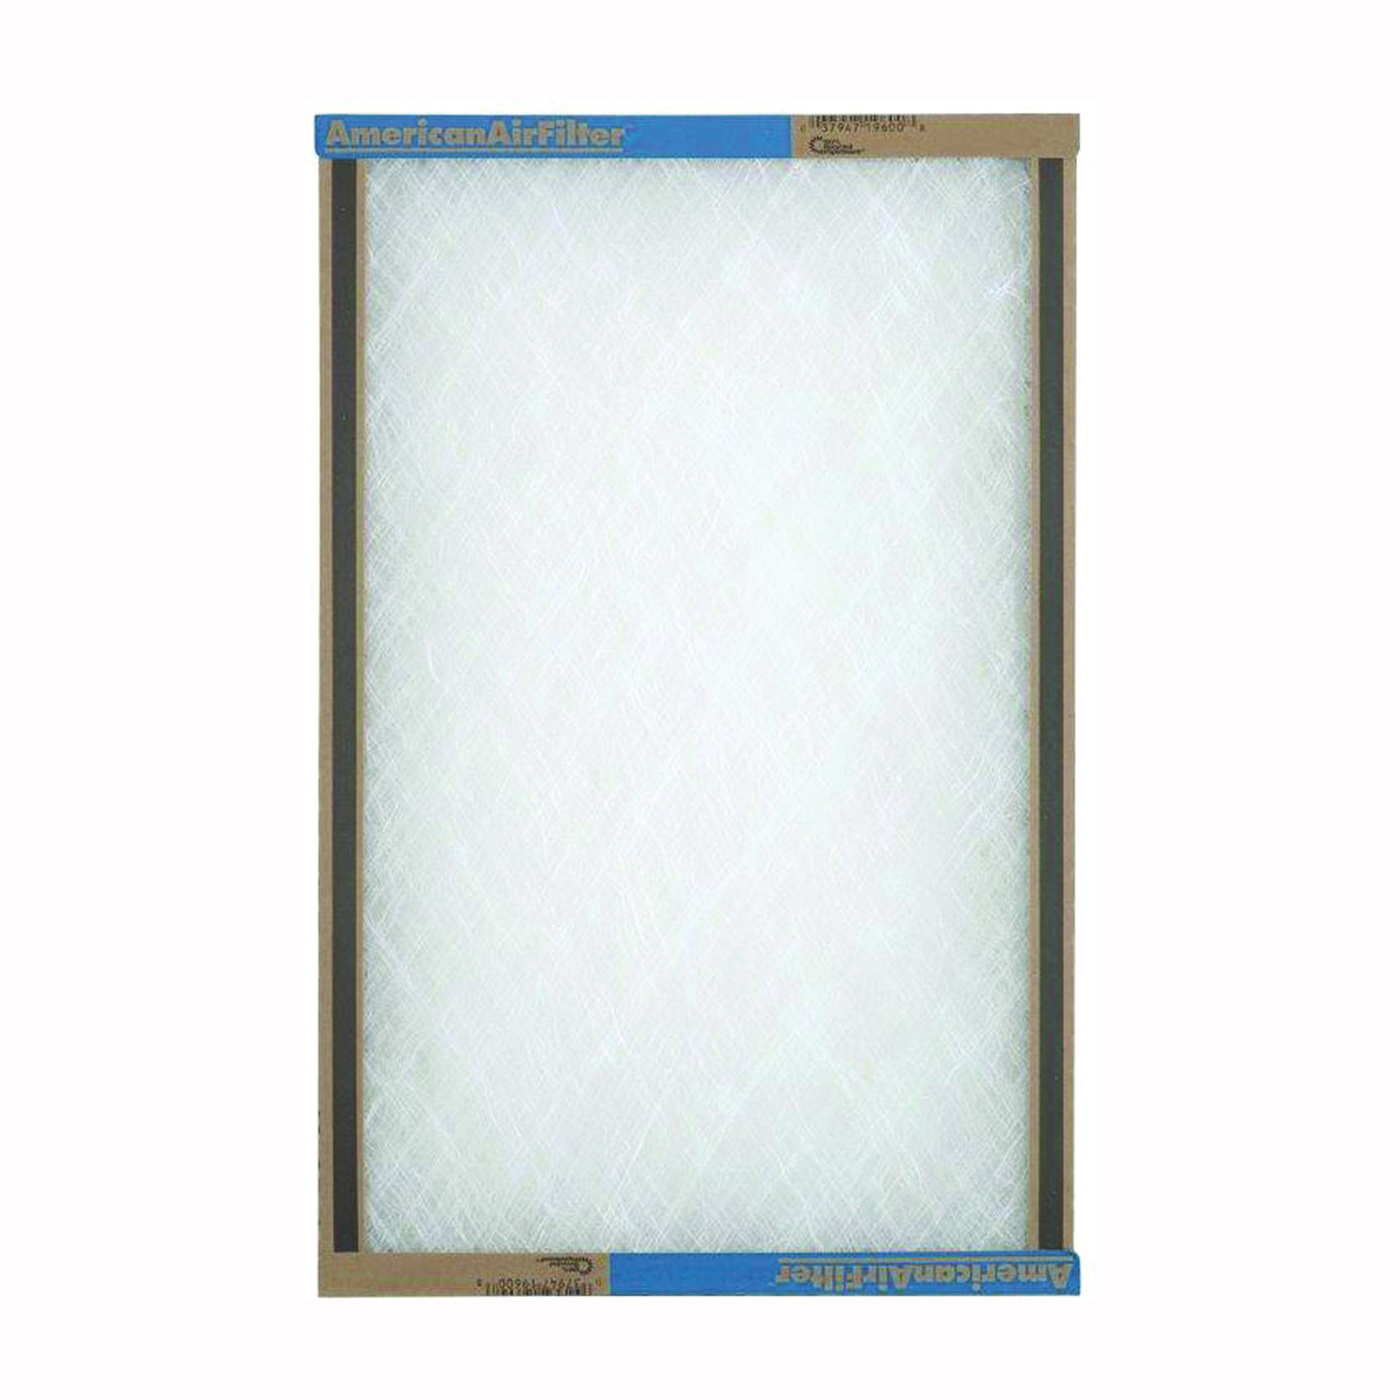 124301 Panel Air Filter, 30 x 24 x 1, Chipboard Frame